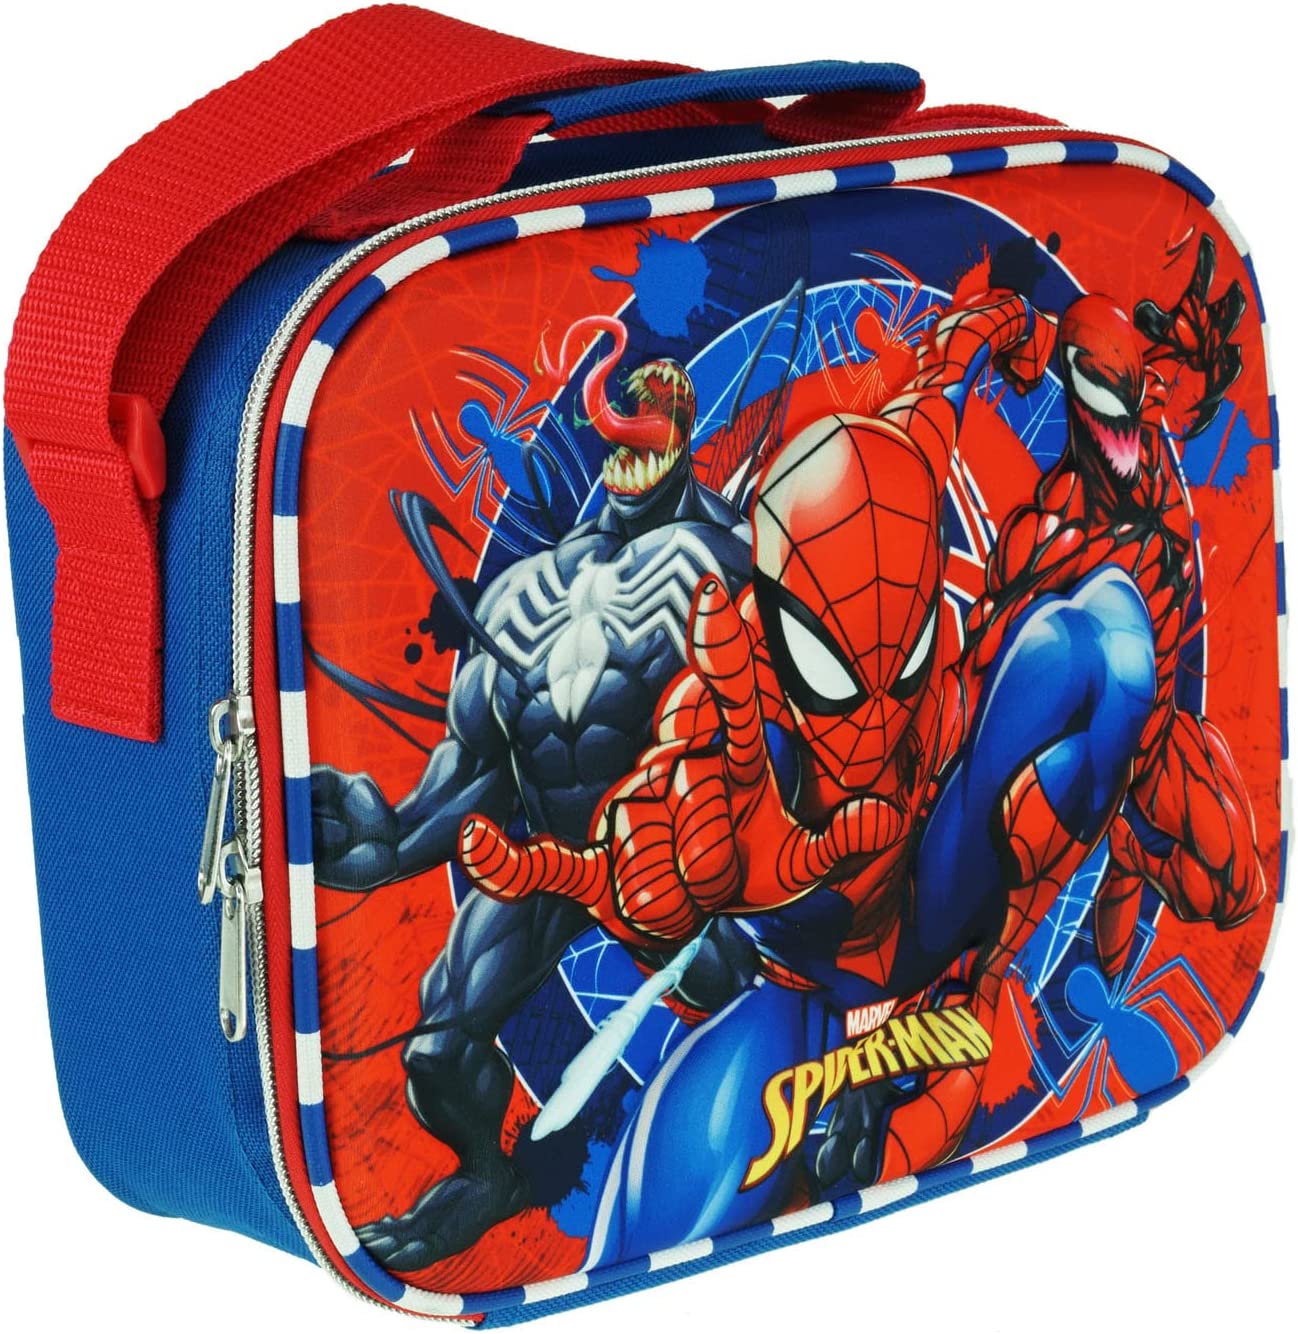 Spiderman Lunch Box Bag Spider-man 3-D EVA Molded